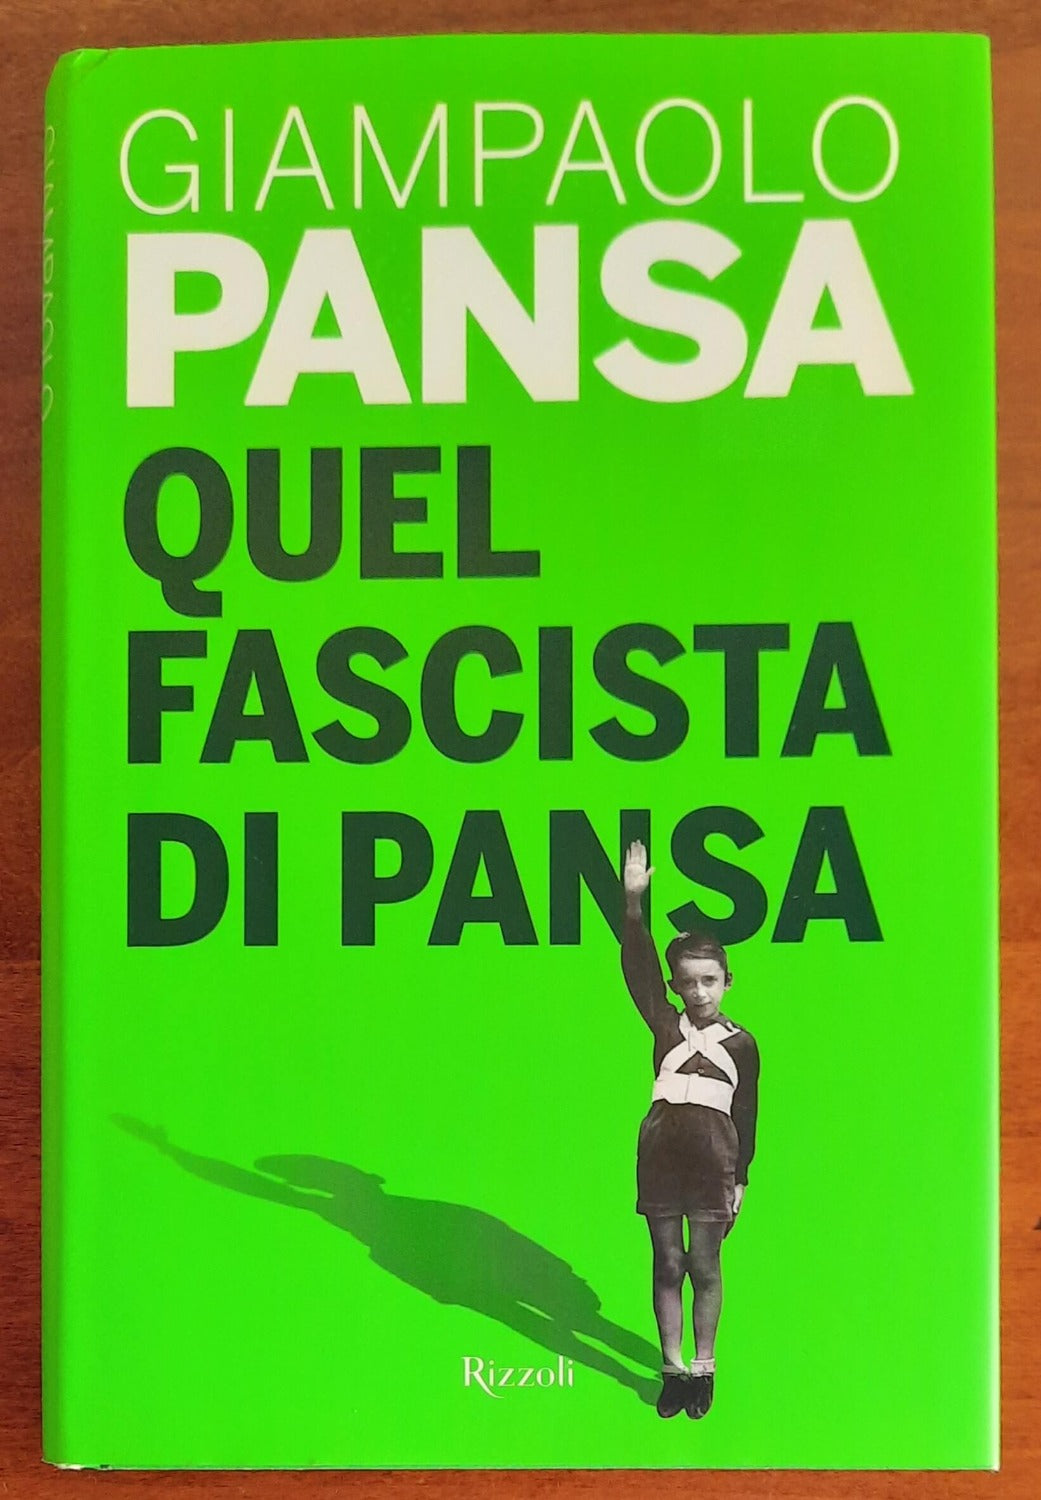 Quel fascista di Pansa - Rizzoli - 2019